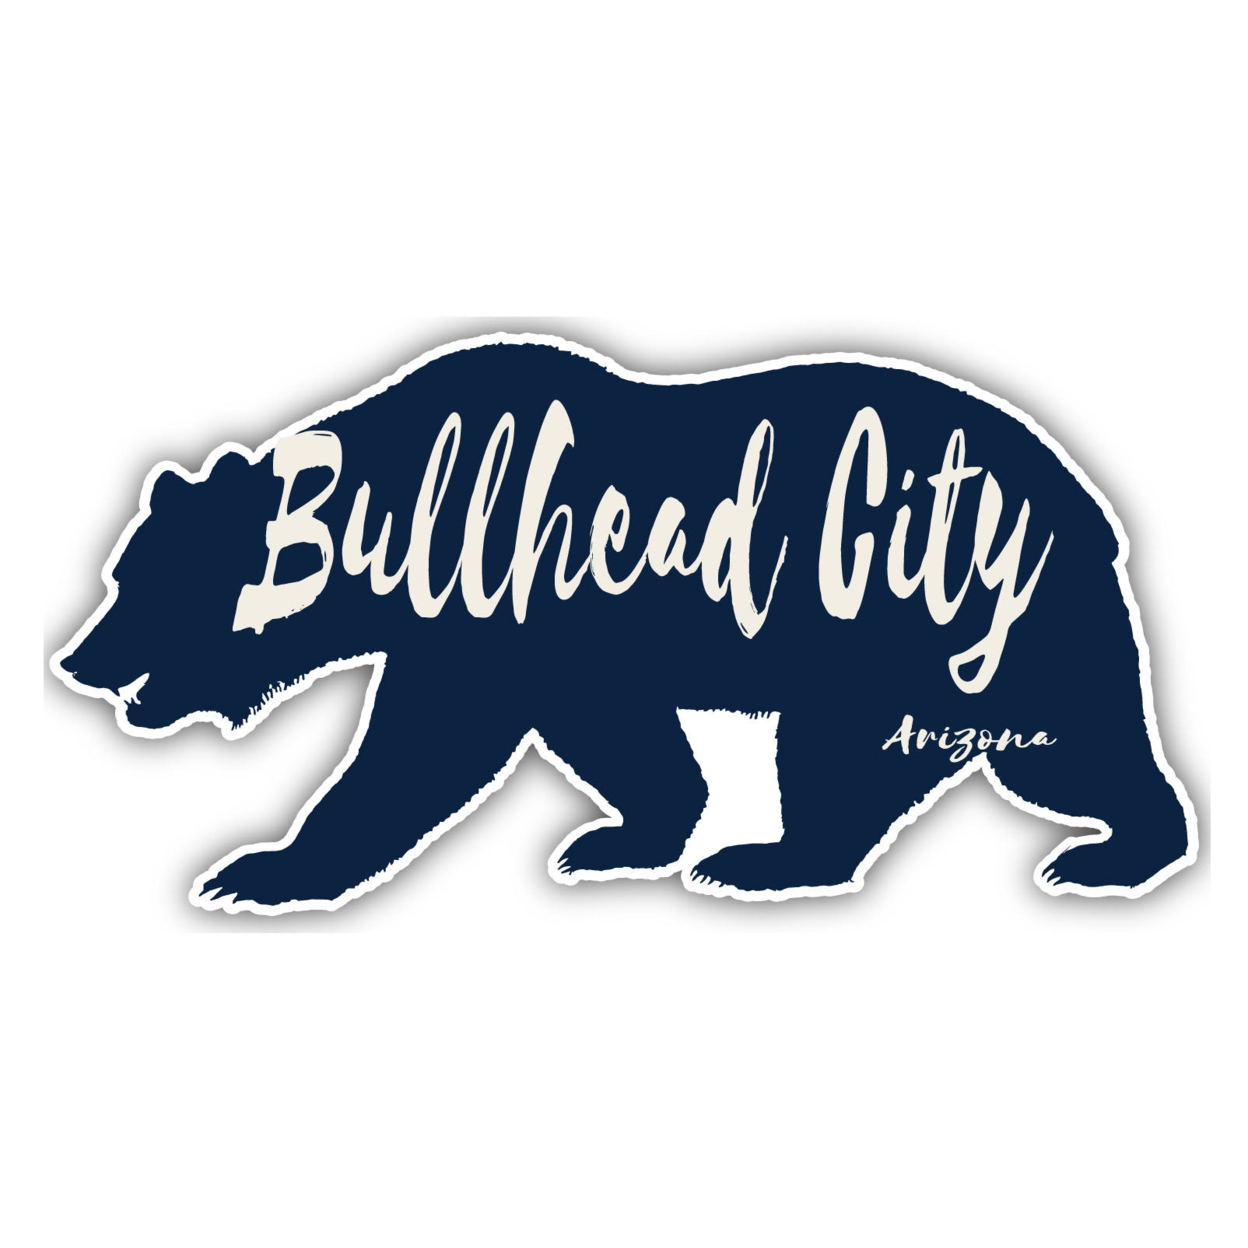 Bullhead City Arizona Souvenir Decorative Stickers (Choose Theme And Size) - Single Unit, 8-Inch, Bear